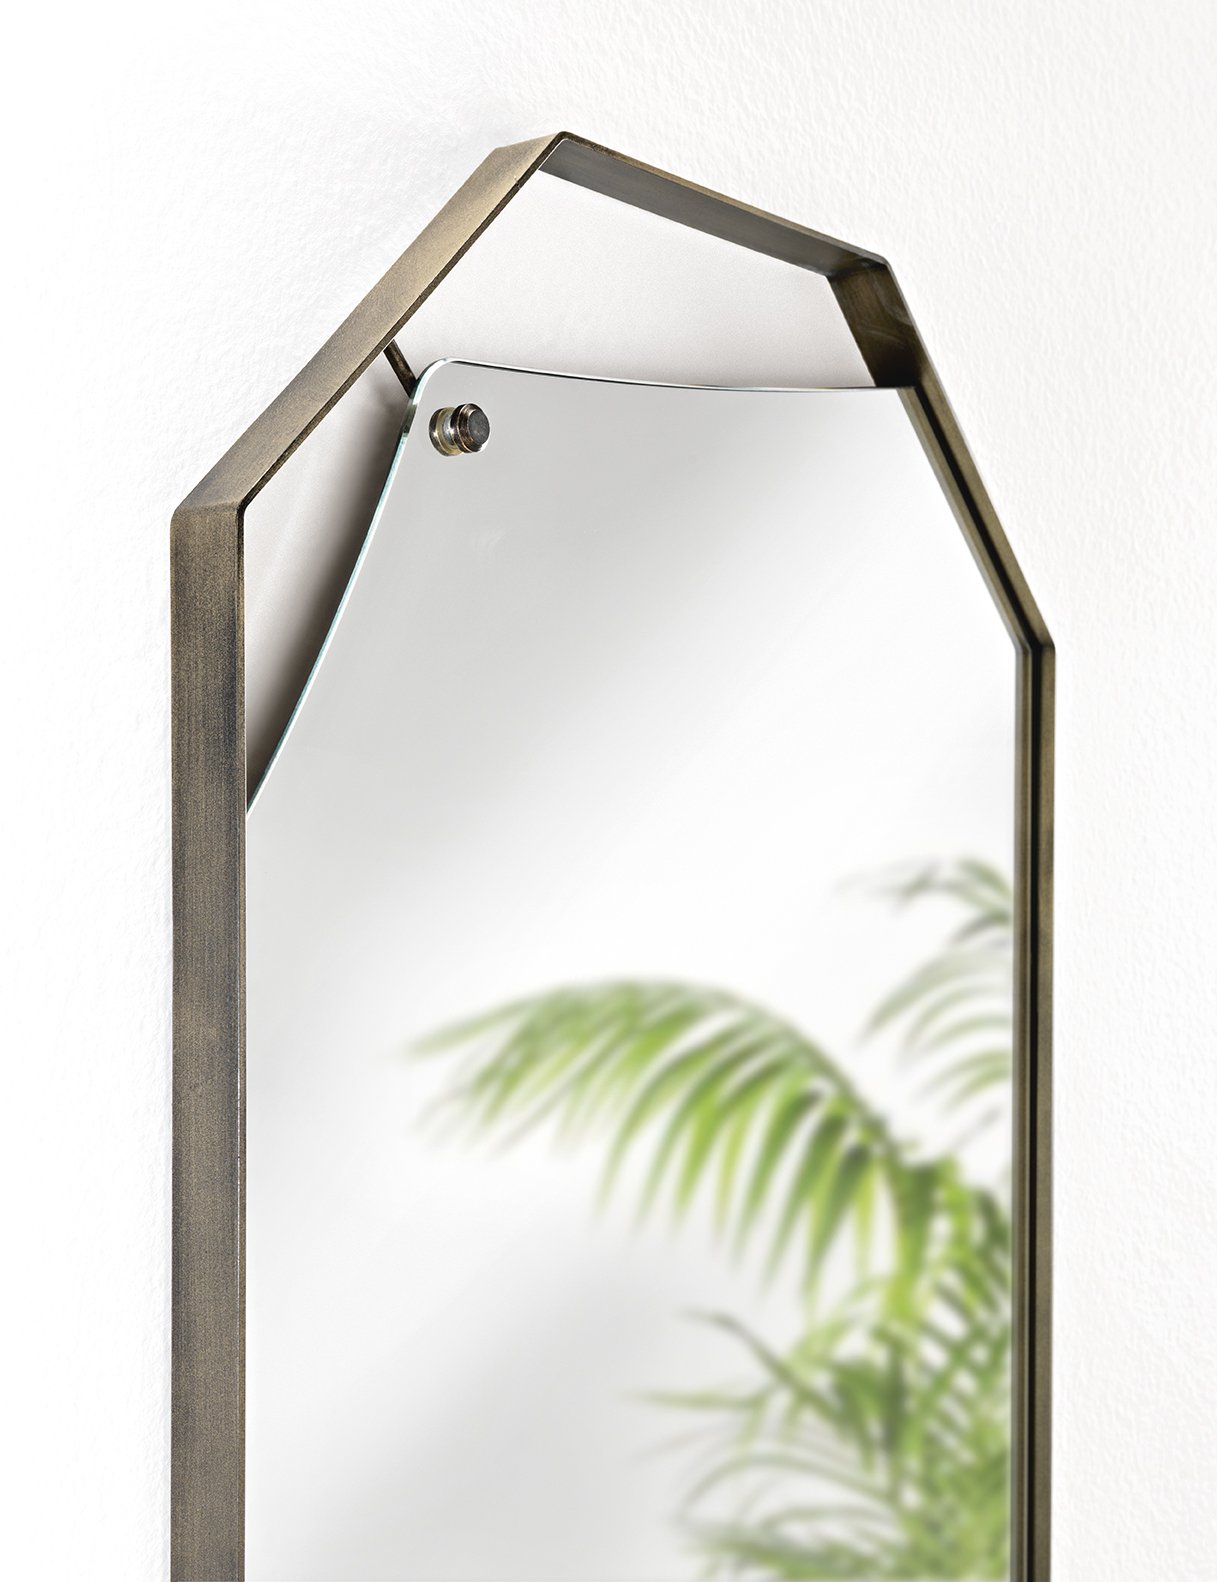 Pinch Mirror accessory from Fiam, designed by Lanzavecchia + Wai